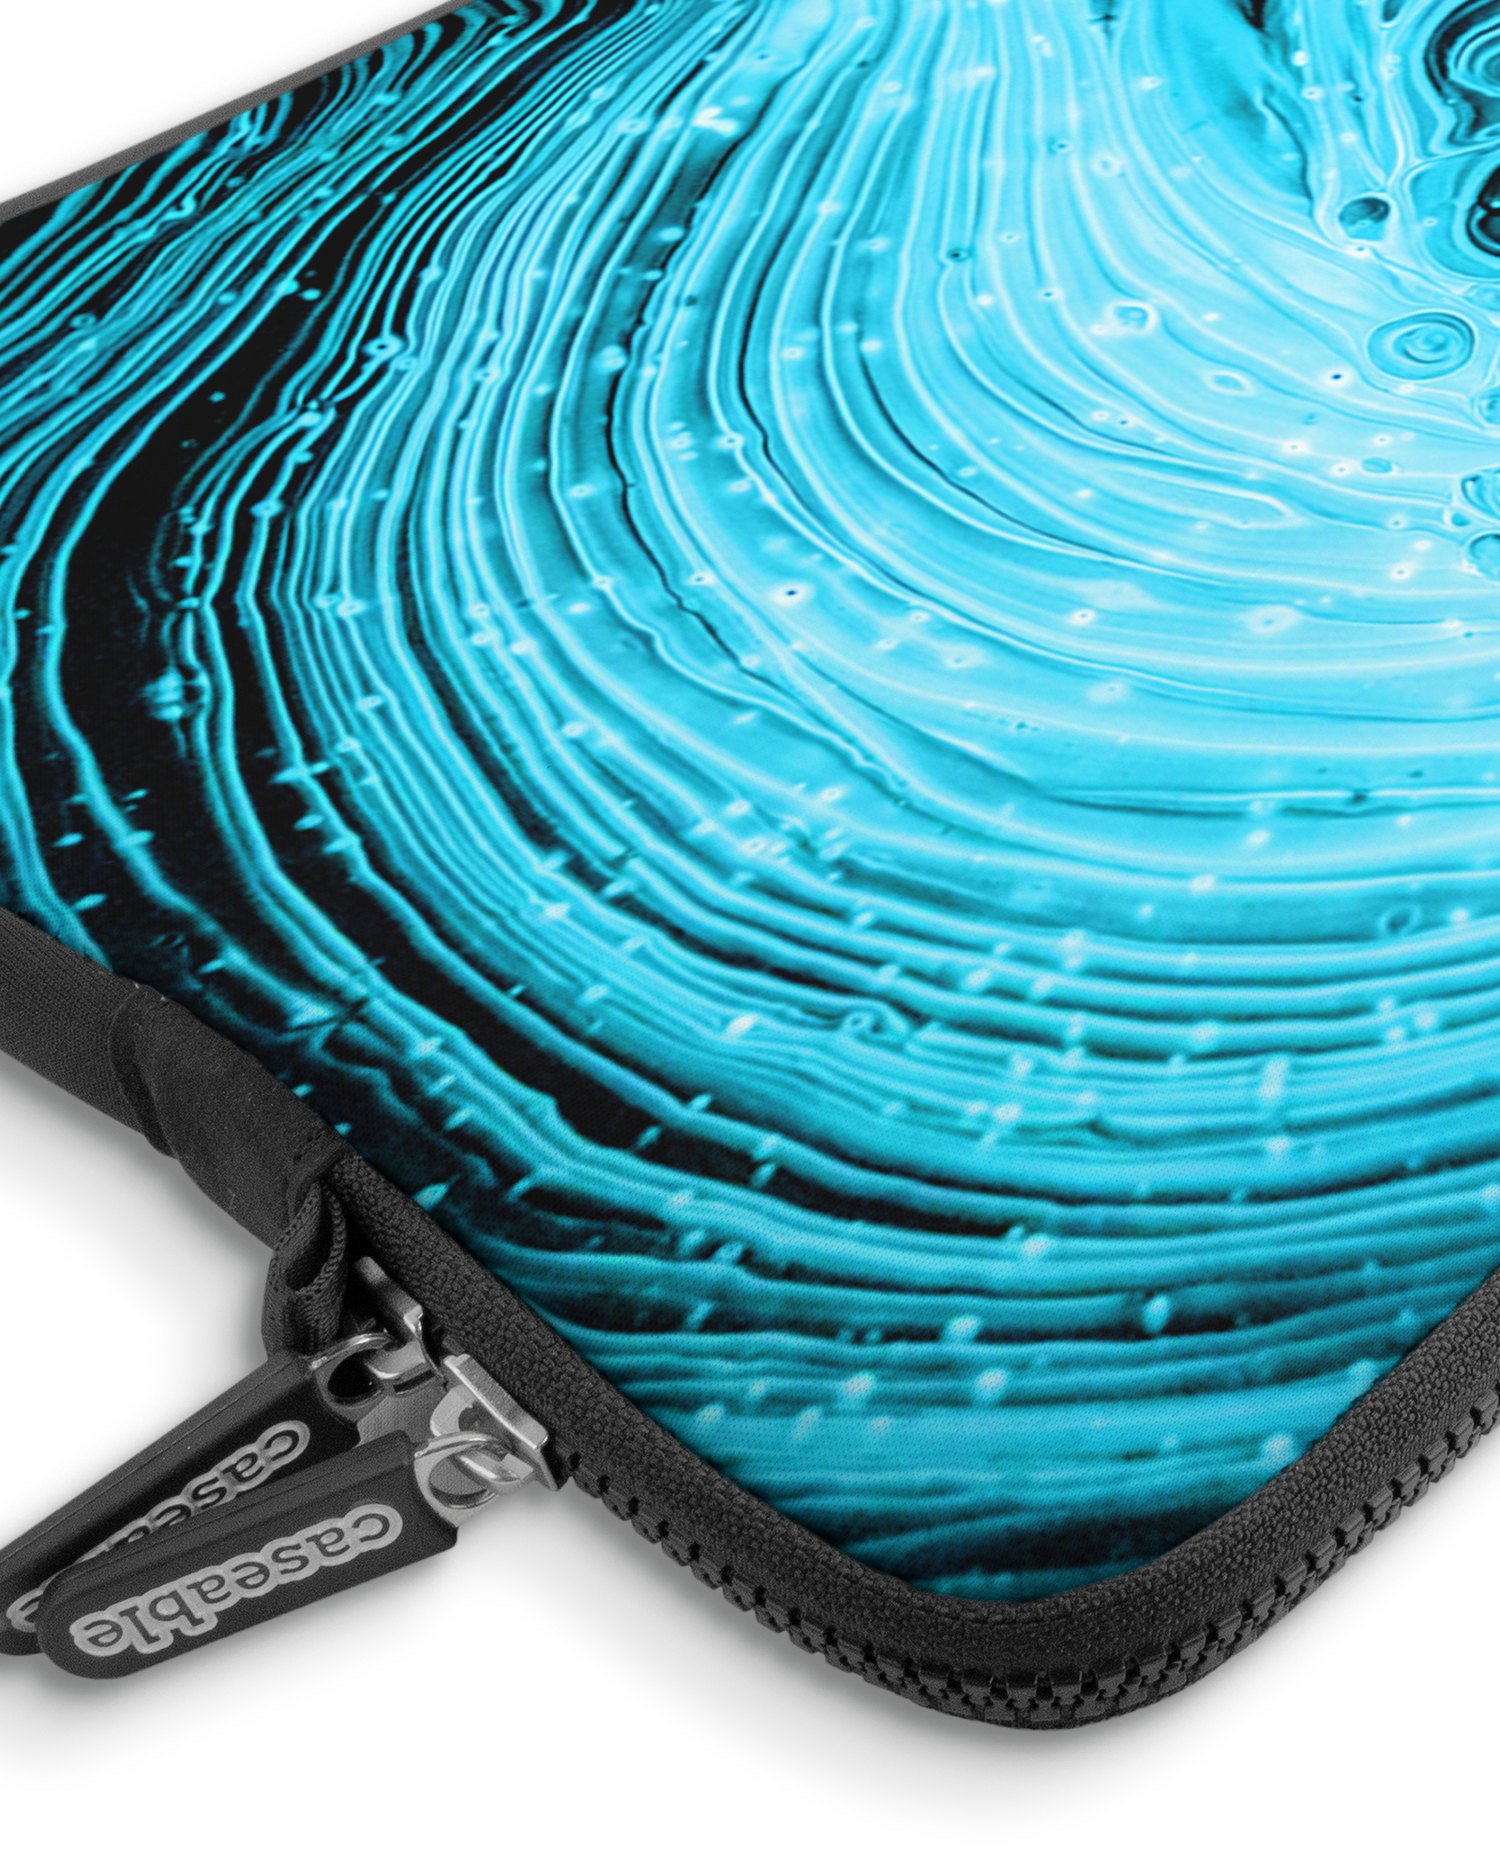 Turquoise Ripples Premium Laptoptasche 13-14 Zoll mit Gerät im Inneren